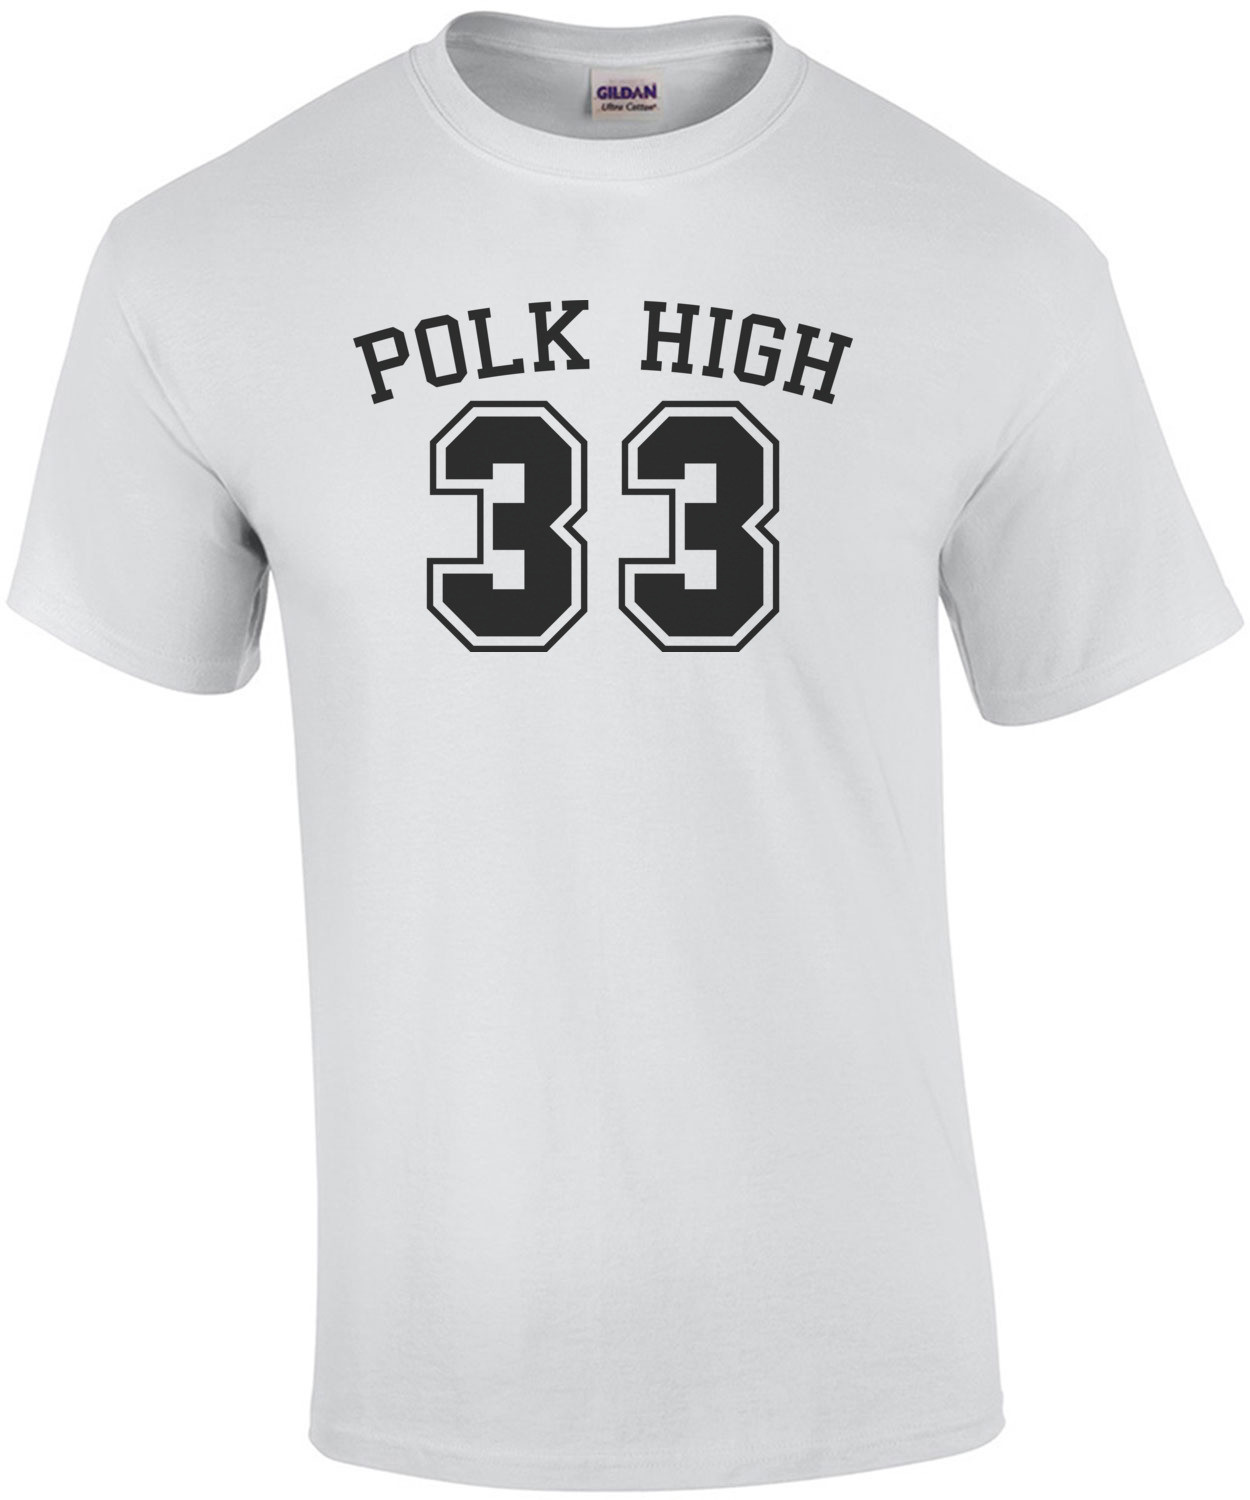 Polk High 33 Al Bundy Married With Children Shirt